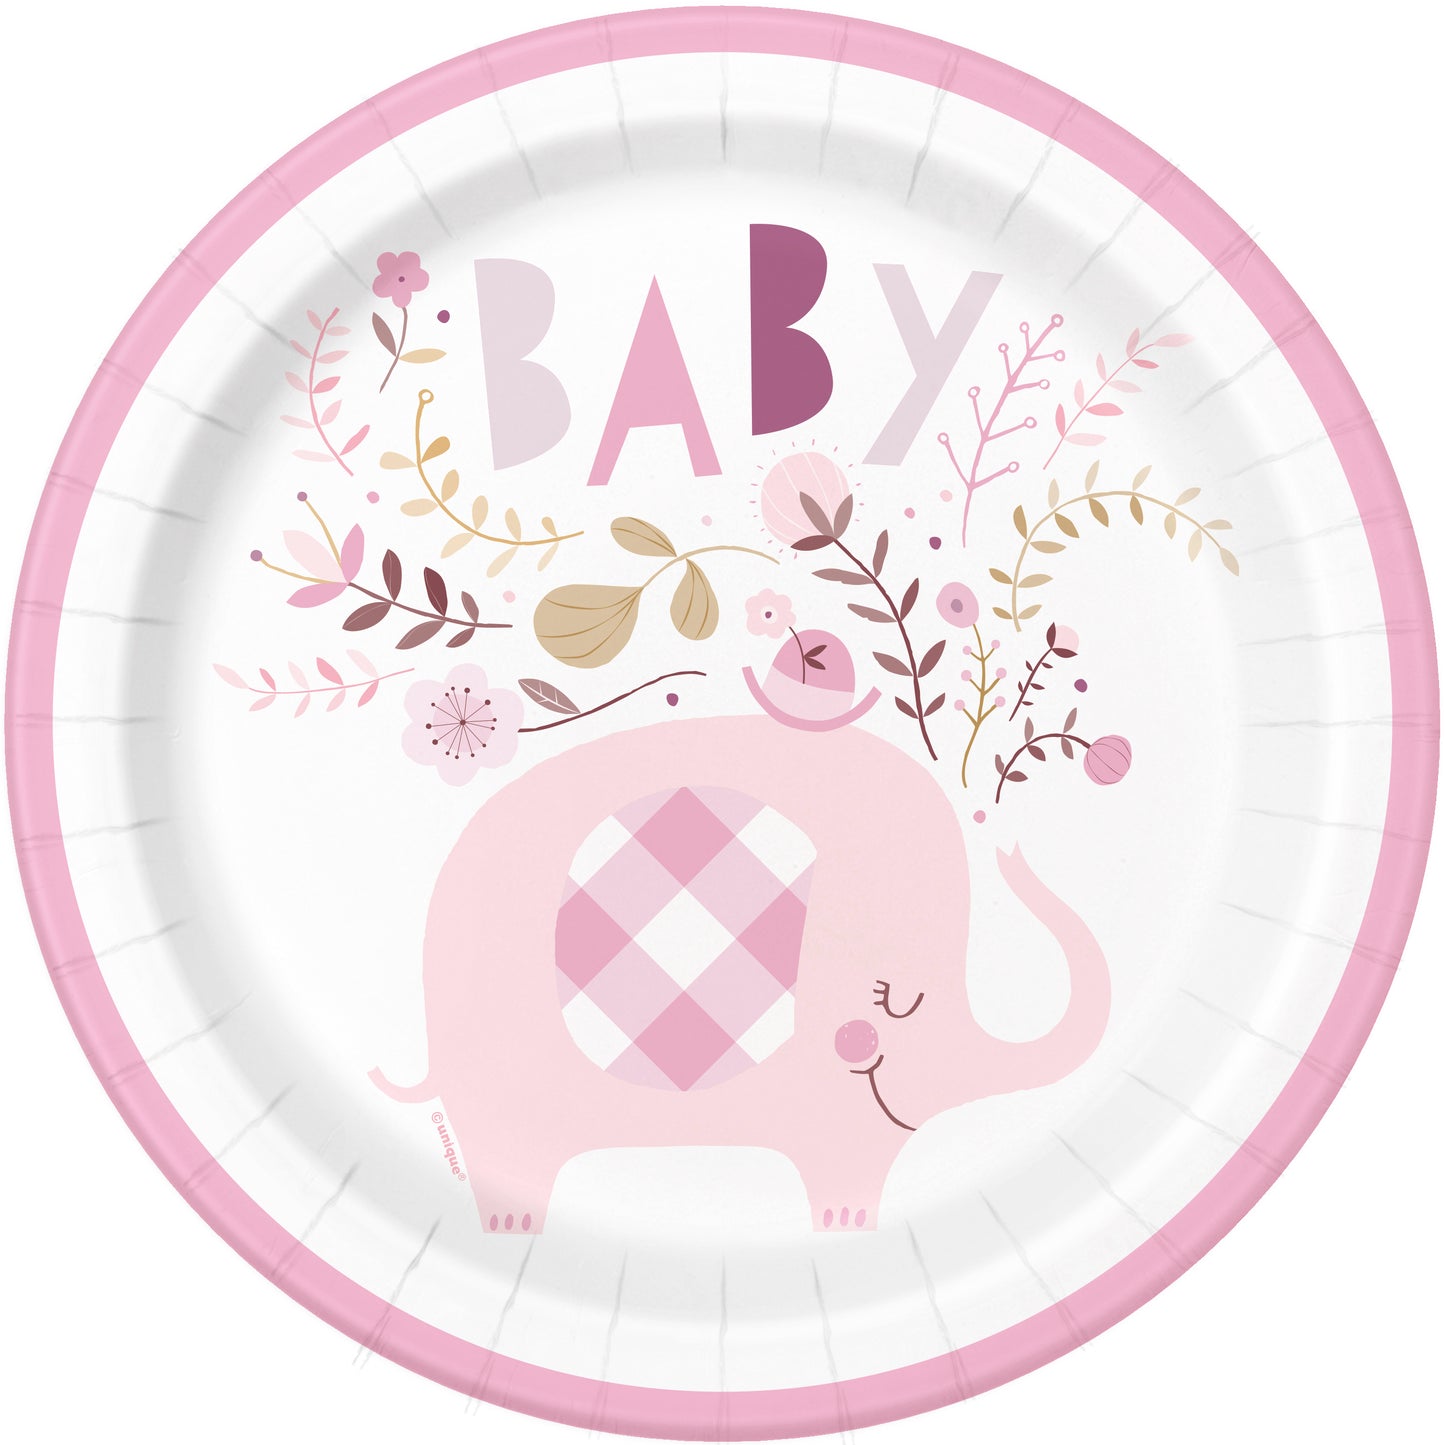 Pink Elephant Baby